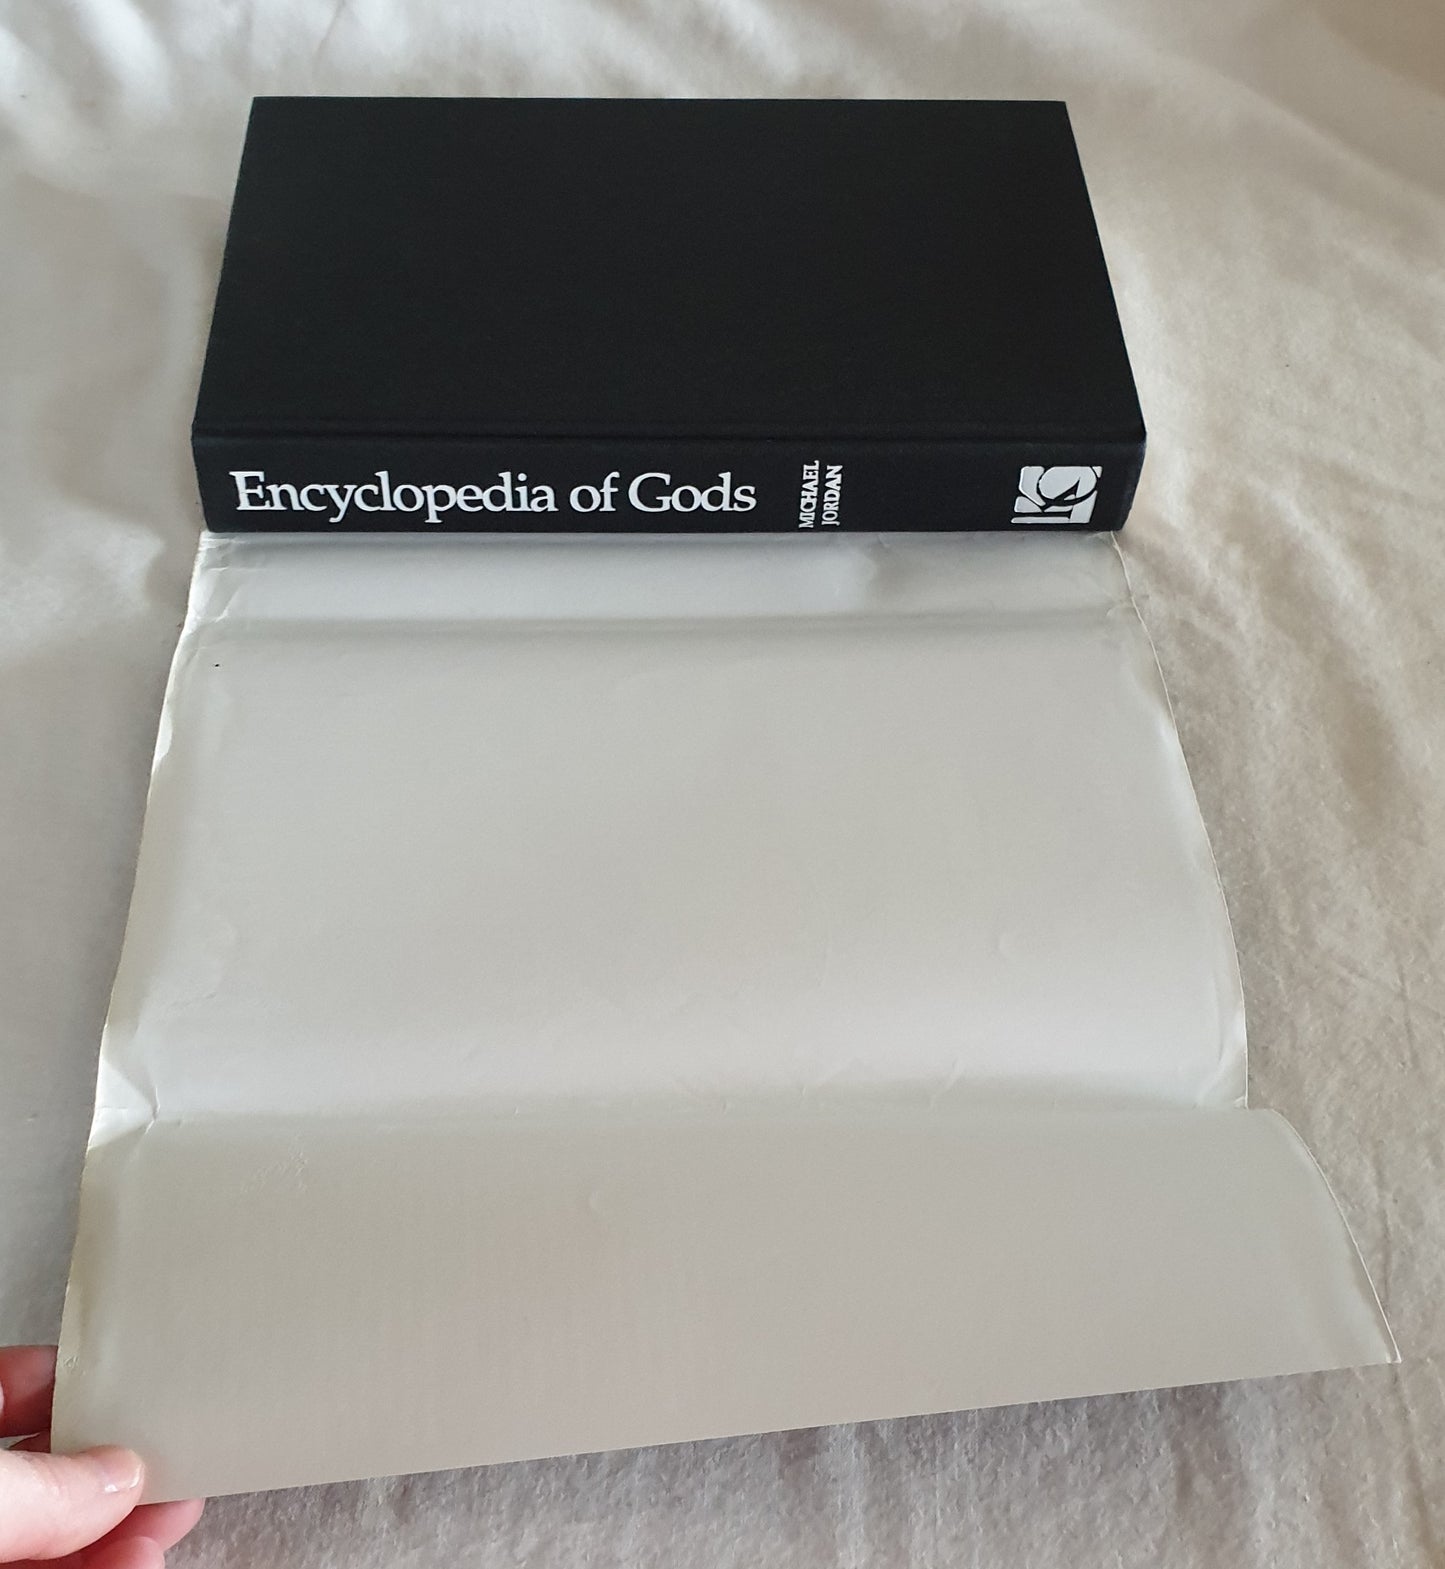 Encyclopedia of Gods by Michael Jordan